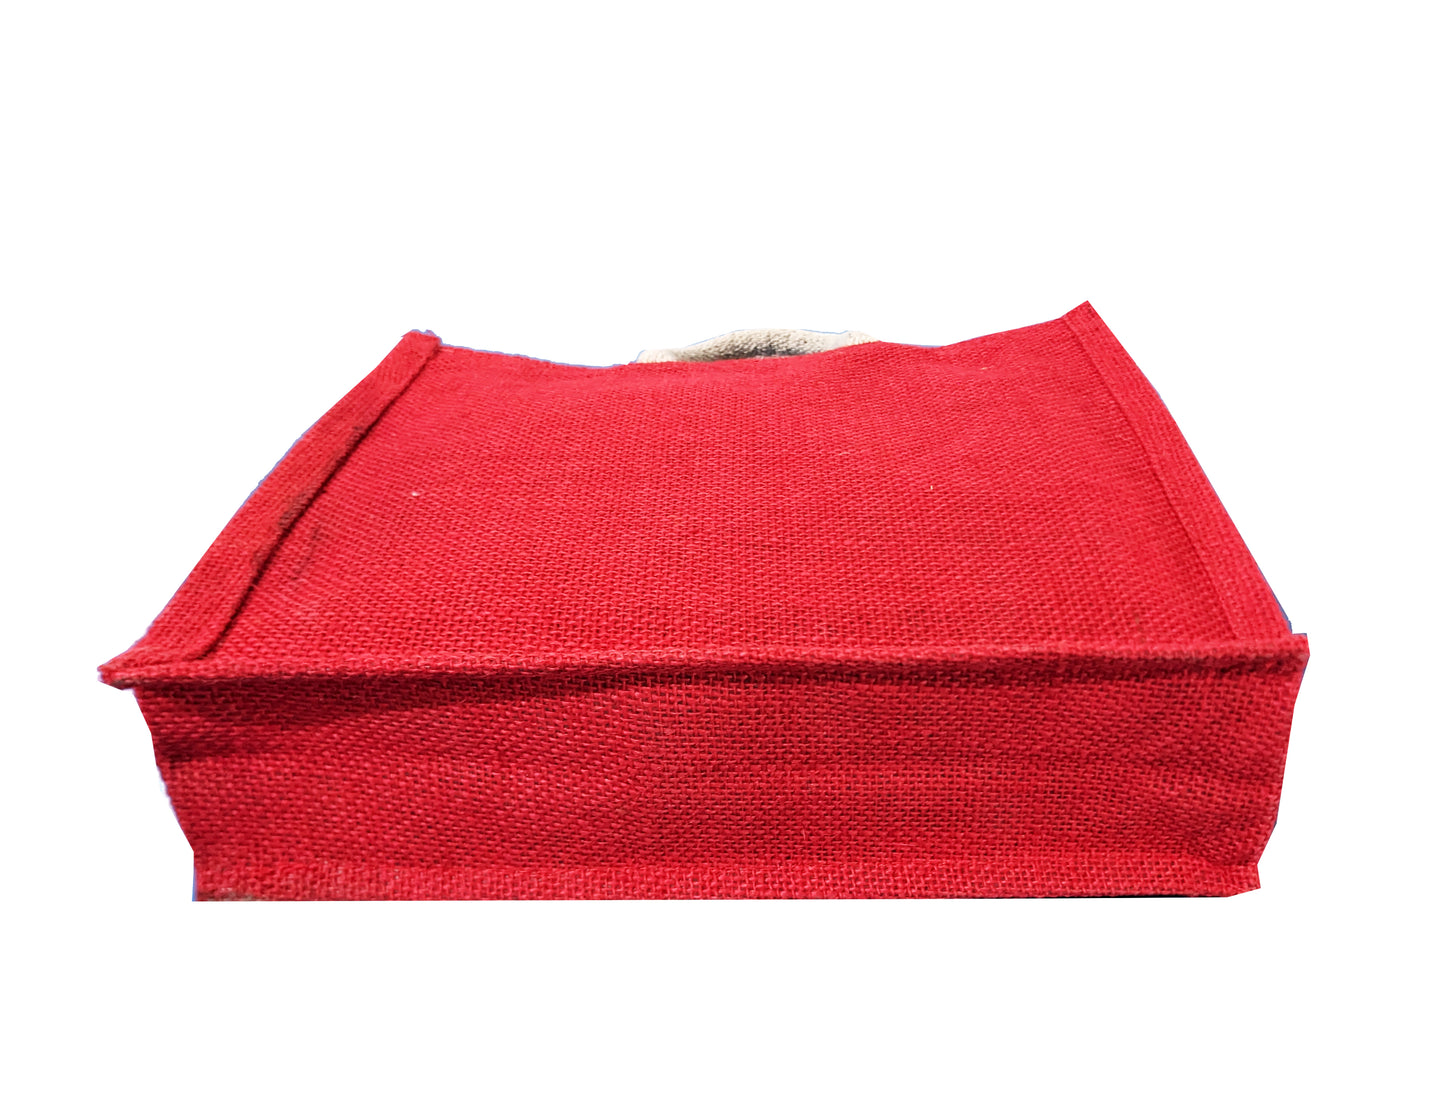 Handmakers Red Jute Bag with White Ganesh Best for Return Gift Bags